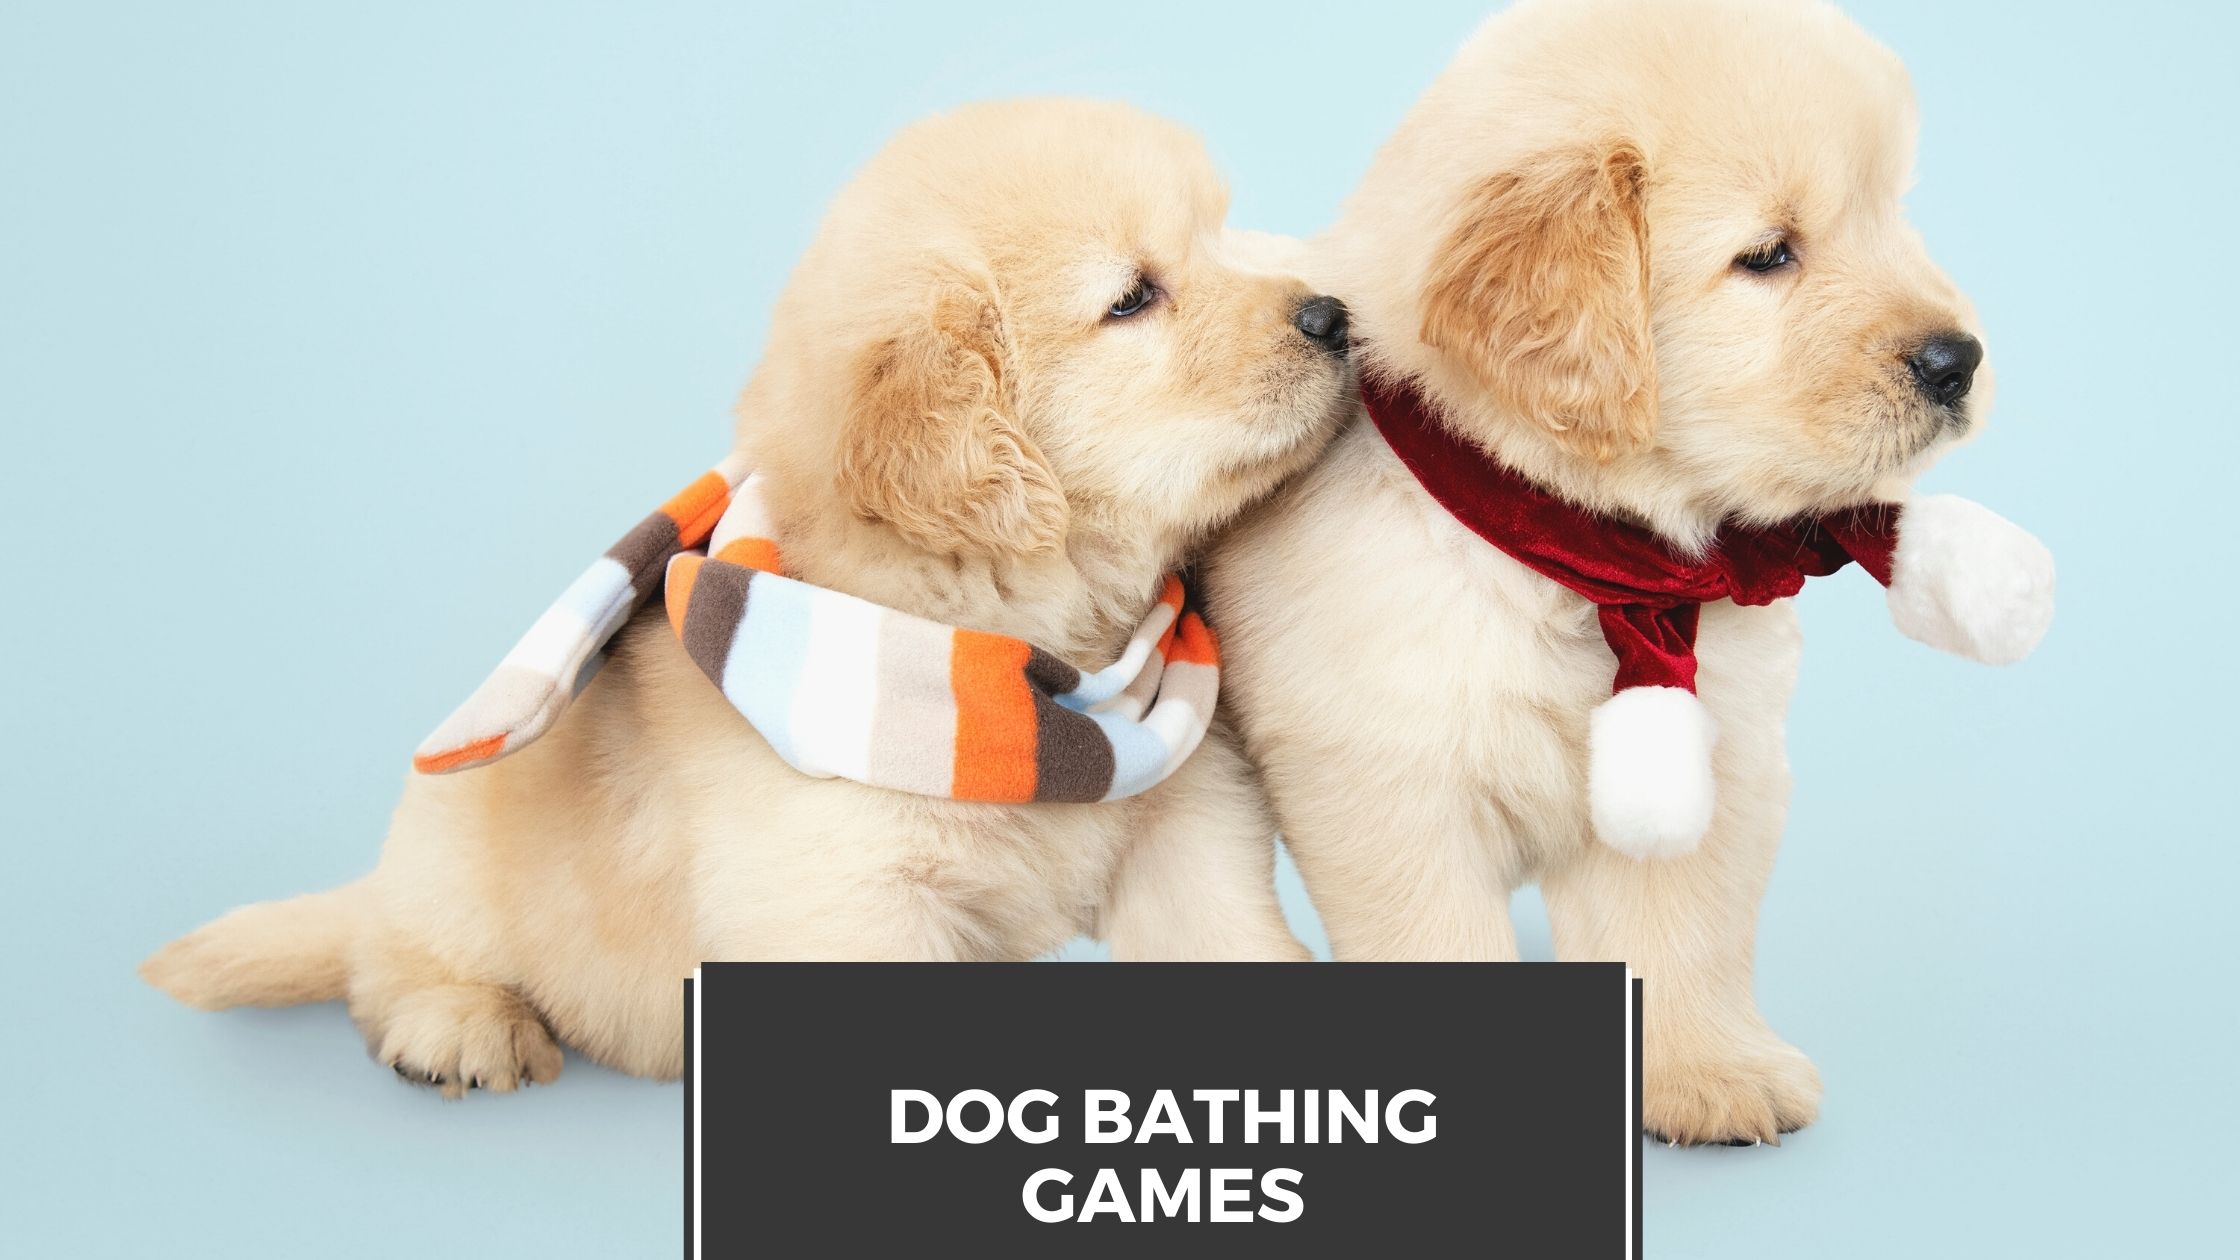 Dog Bathing Games